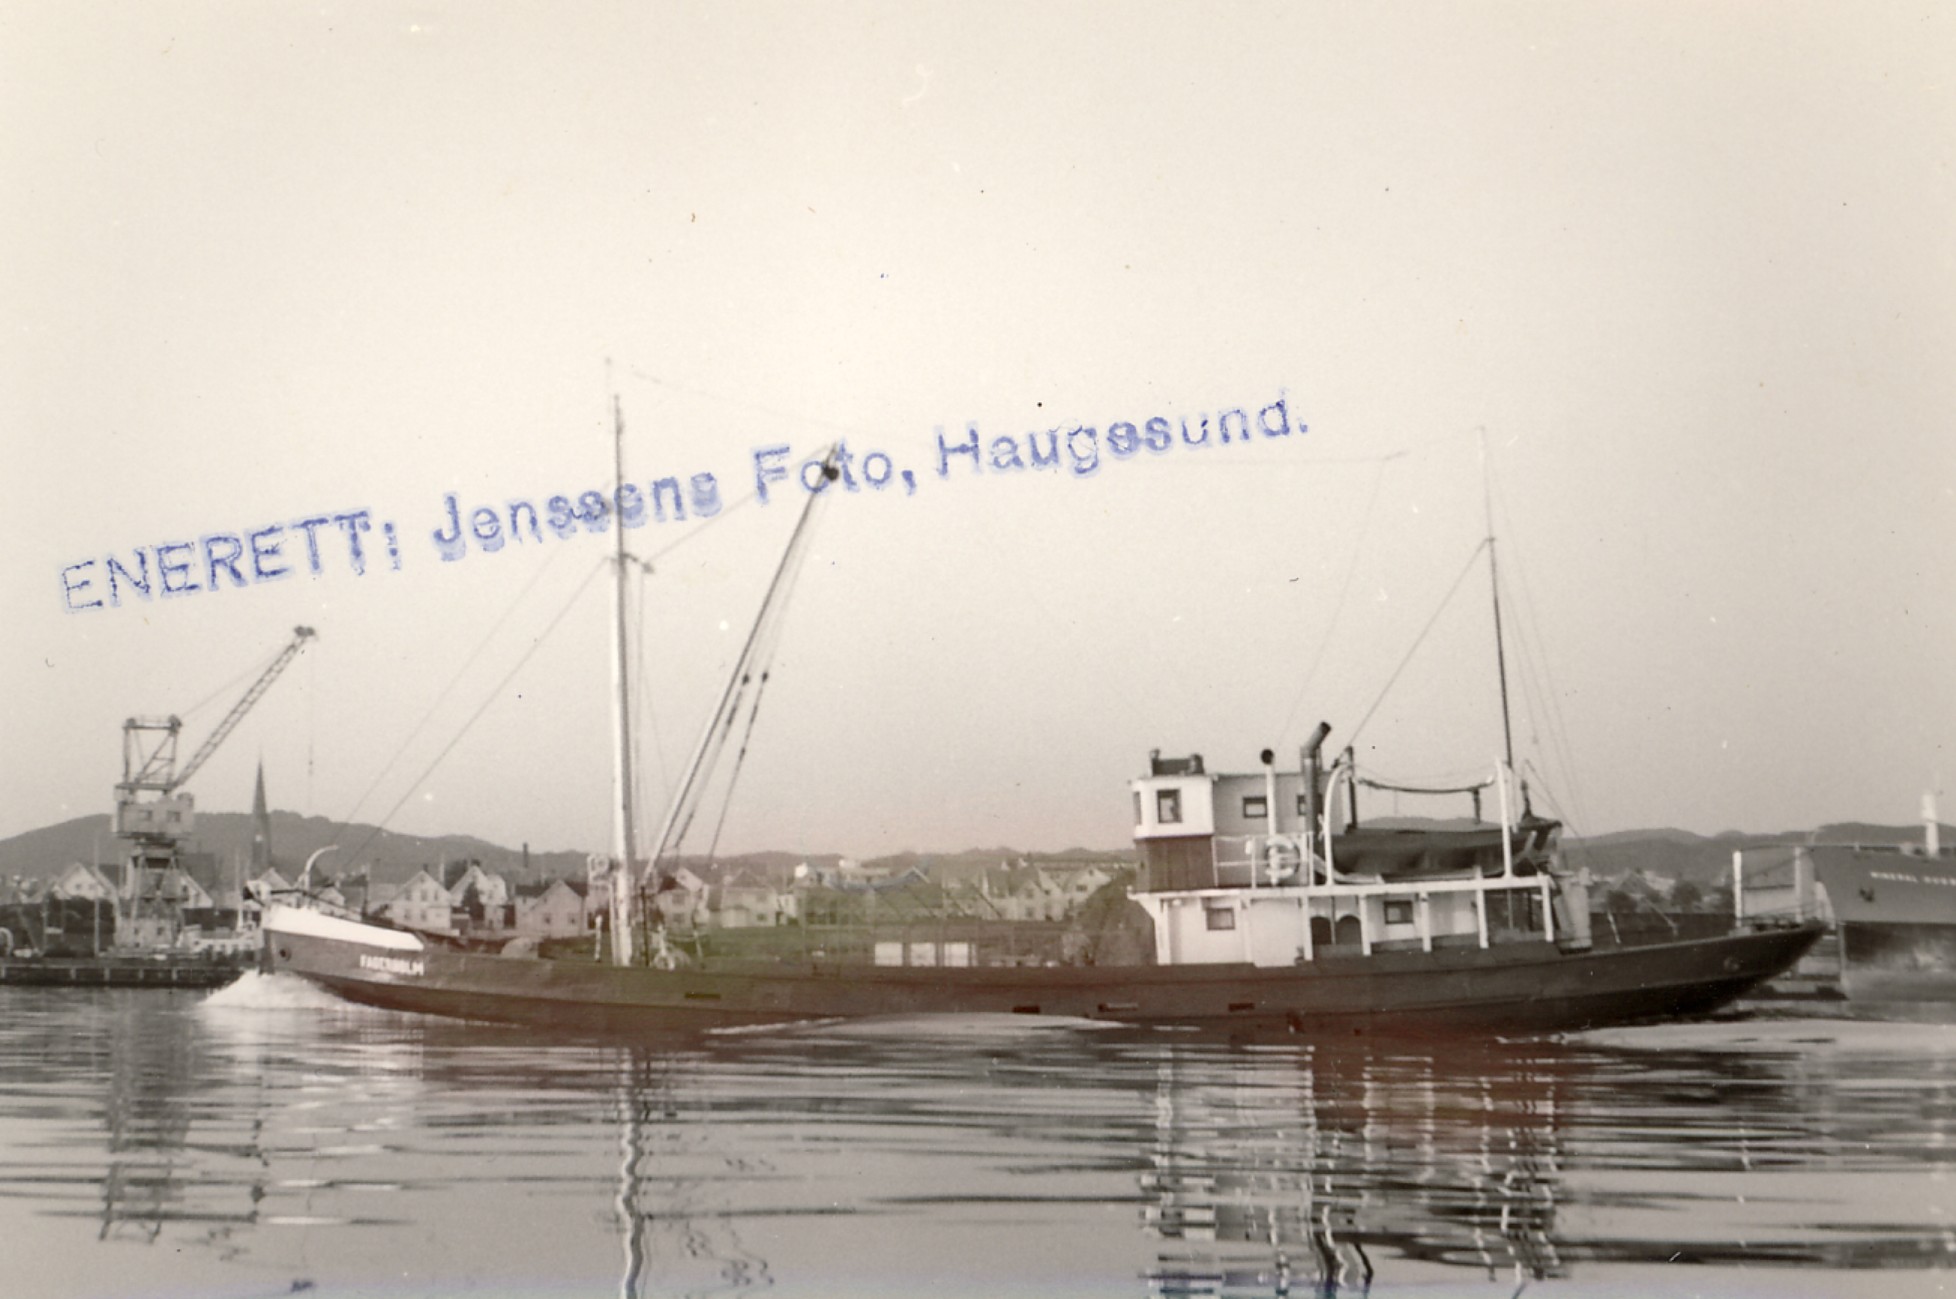 Fagerholm (1908)